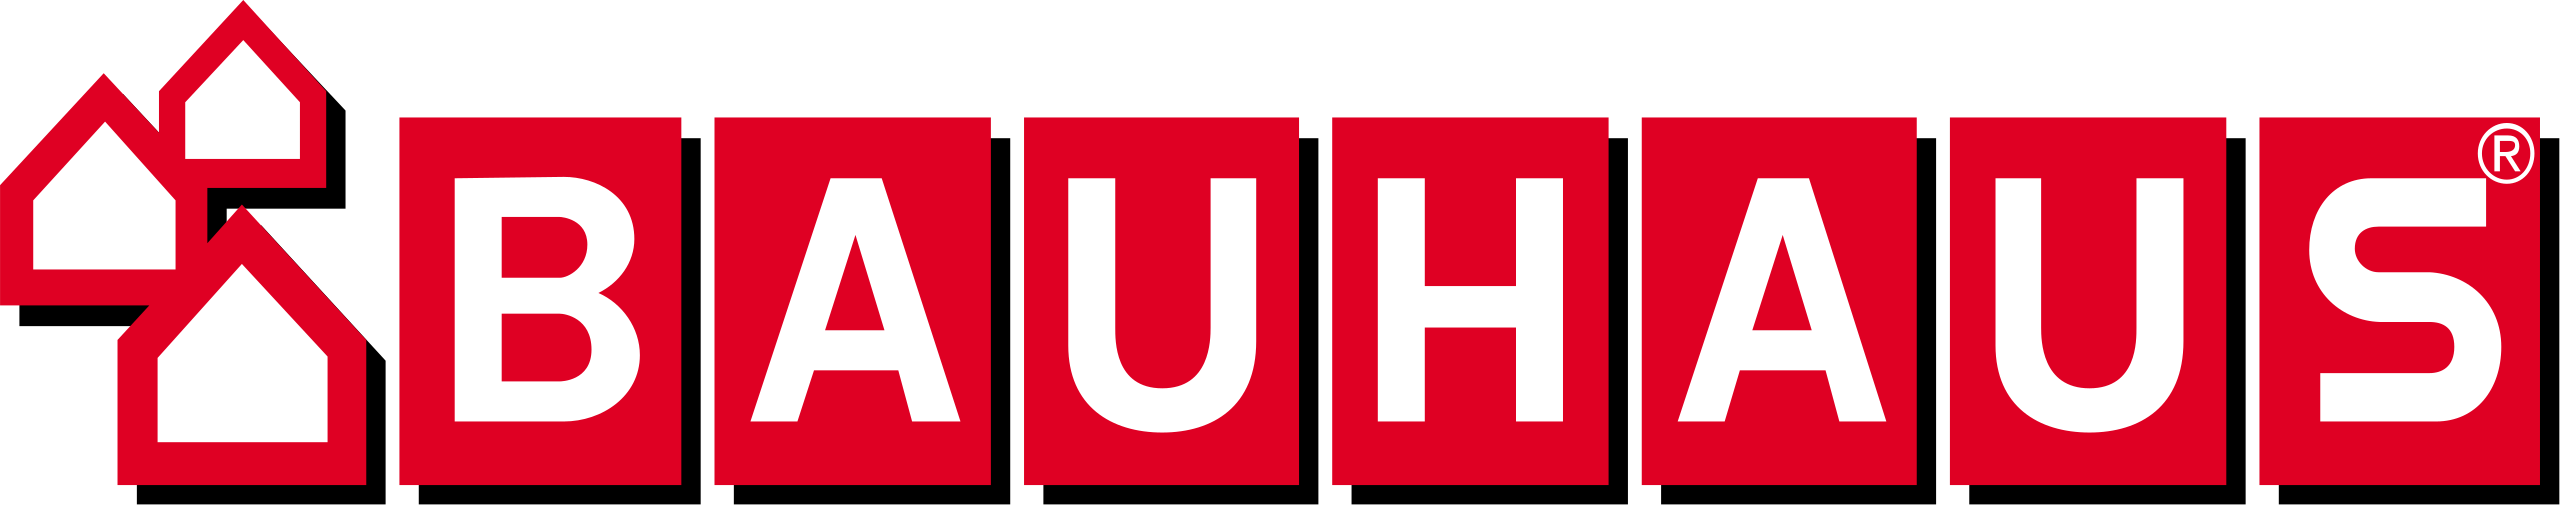 Bauhaus_(Baumarkt)_logo.svg